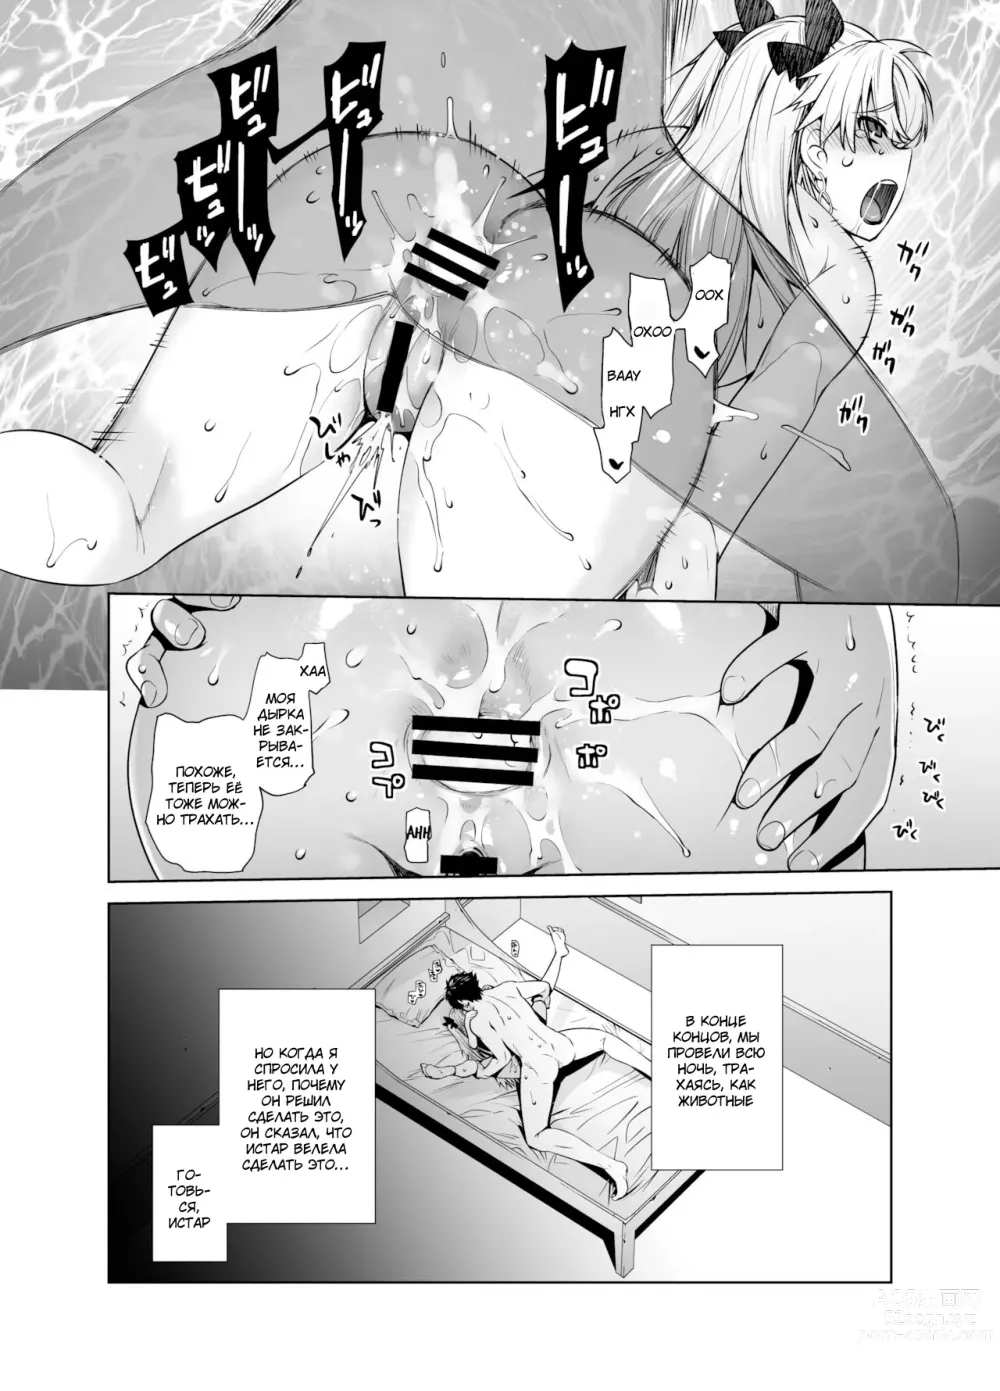 Page 23 of doujinshi HEAVENS DRIVE 9